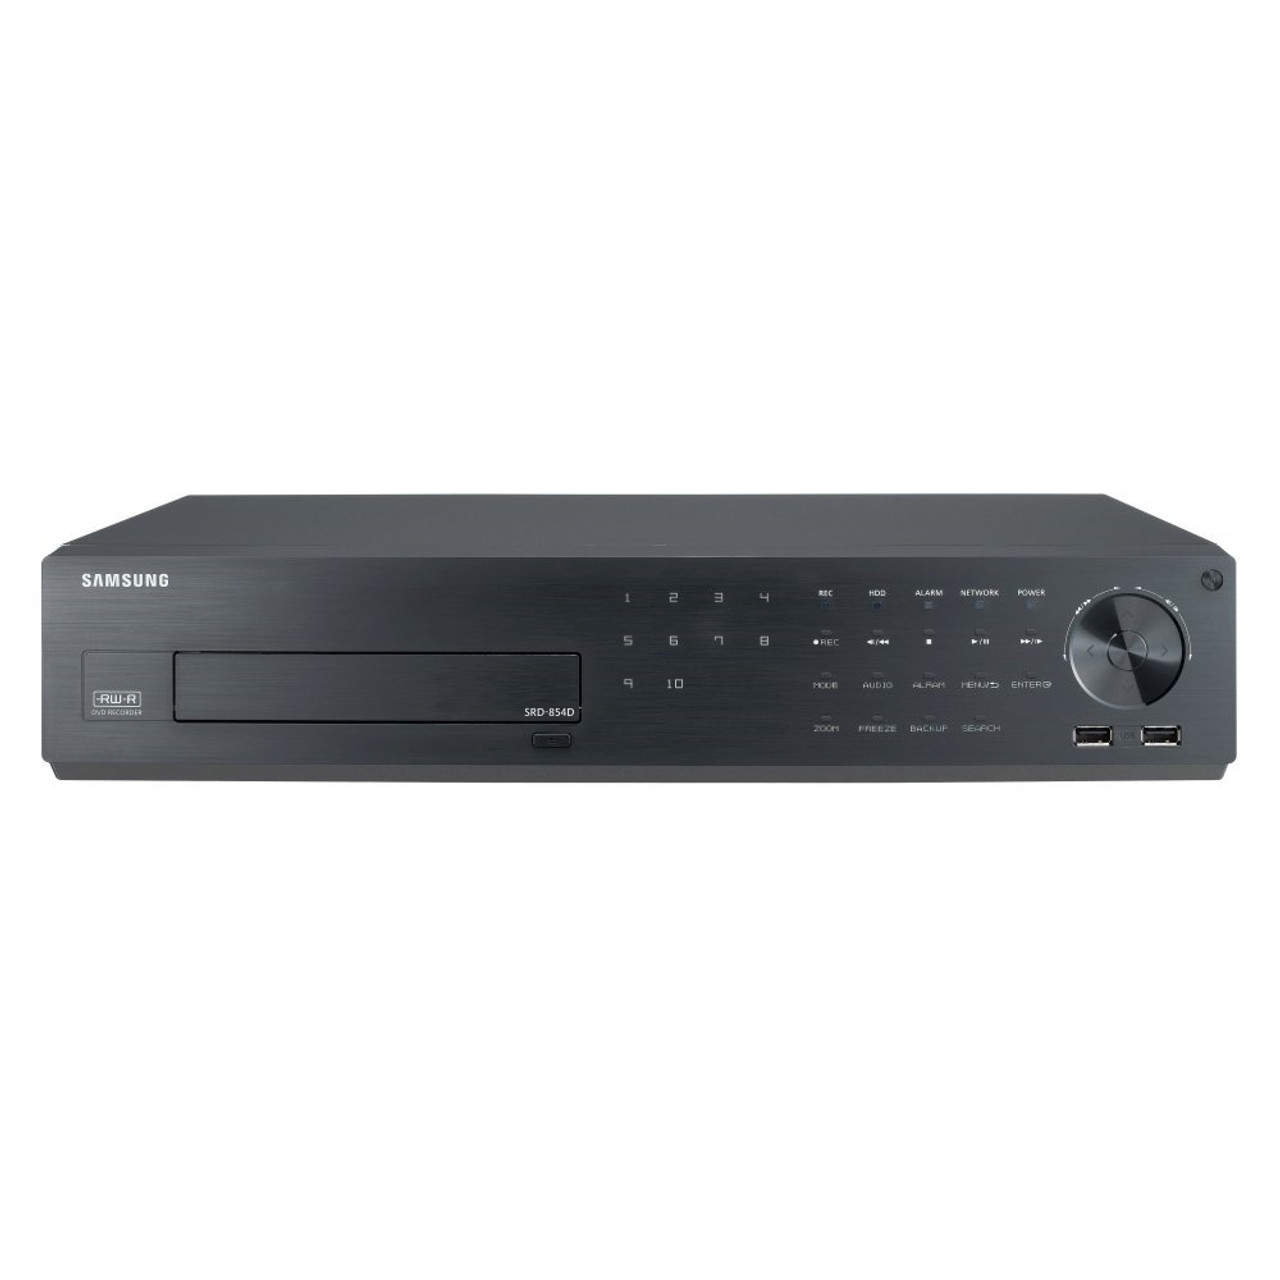 Samsung SRD-854D-1TB 8-Channel Digital Video Recorder - 1TB HDD included